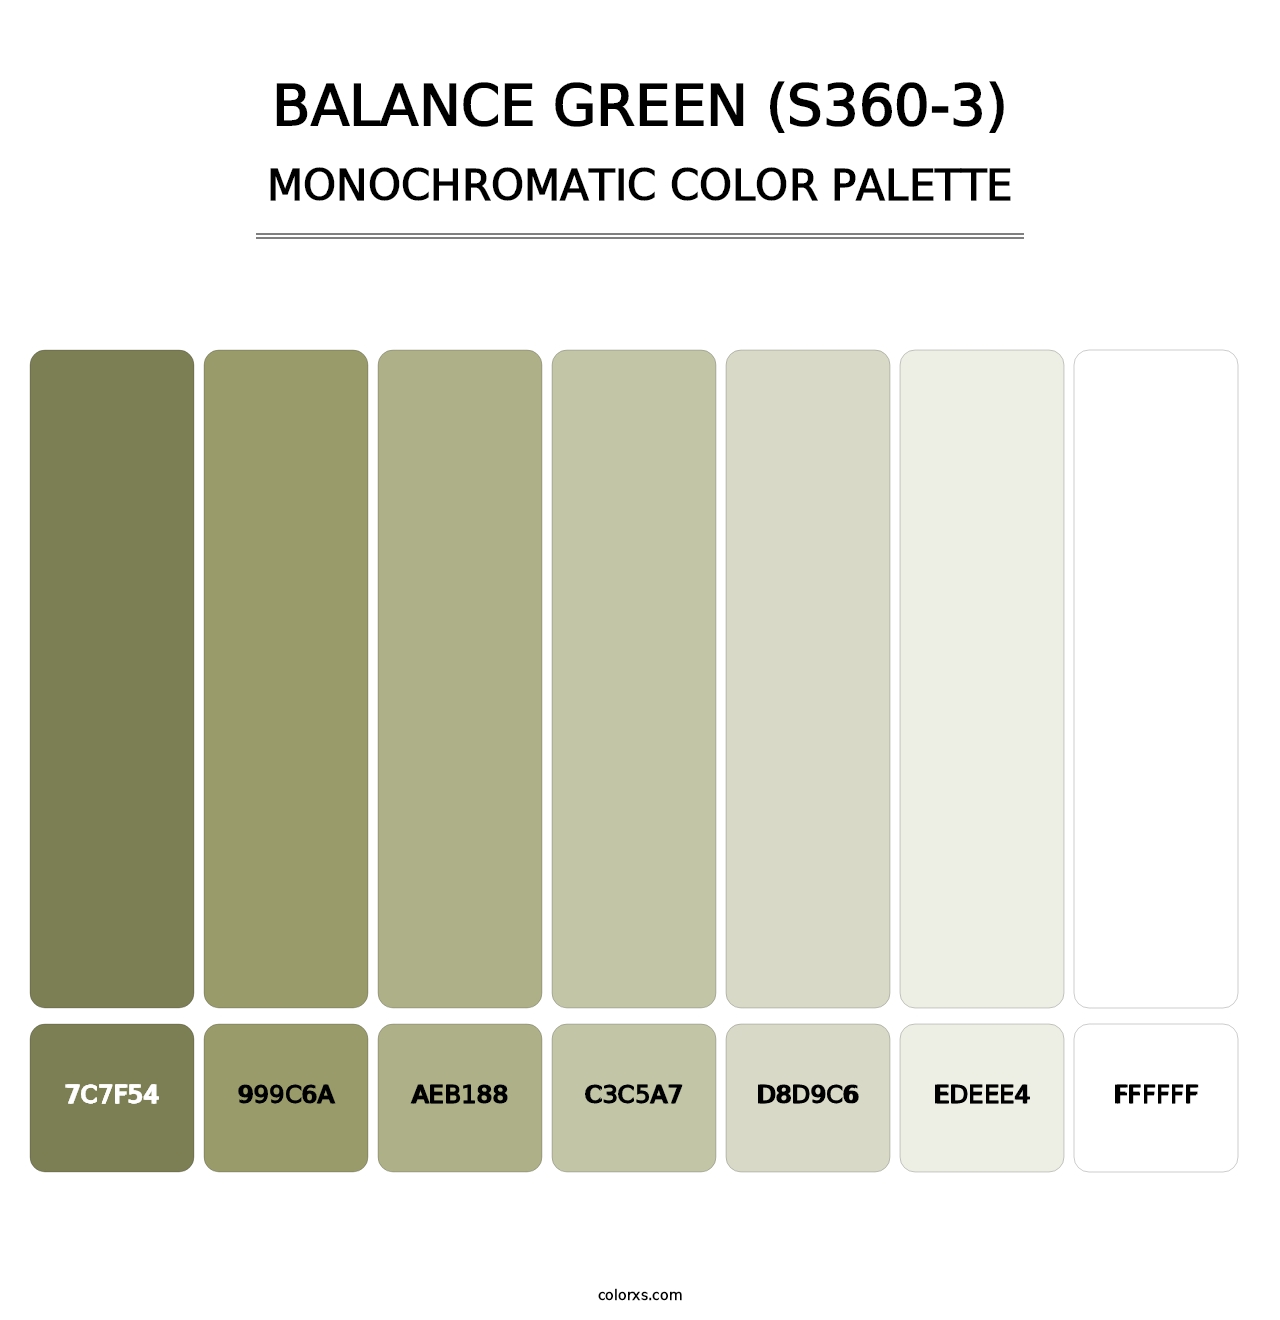 Balance Green (S360-3) - Monochromatic Color Palette